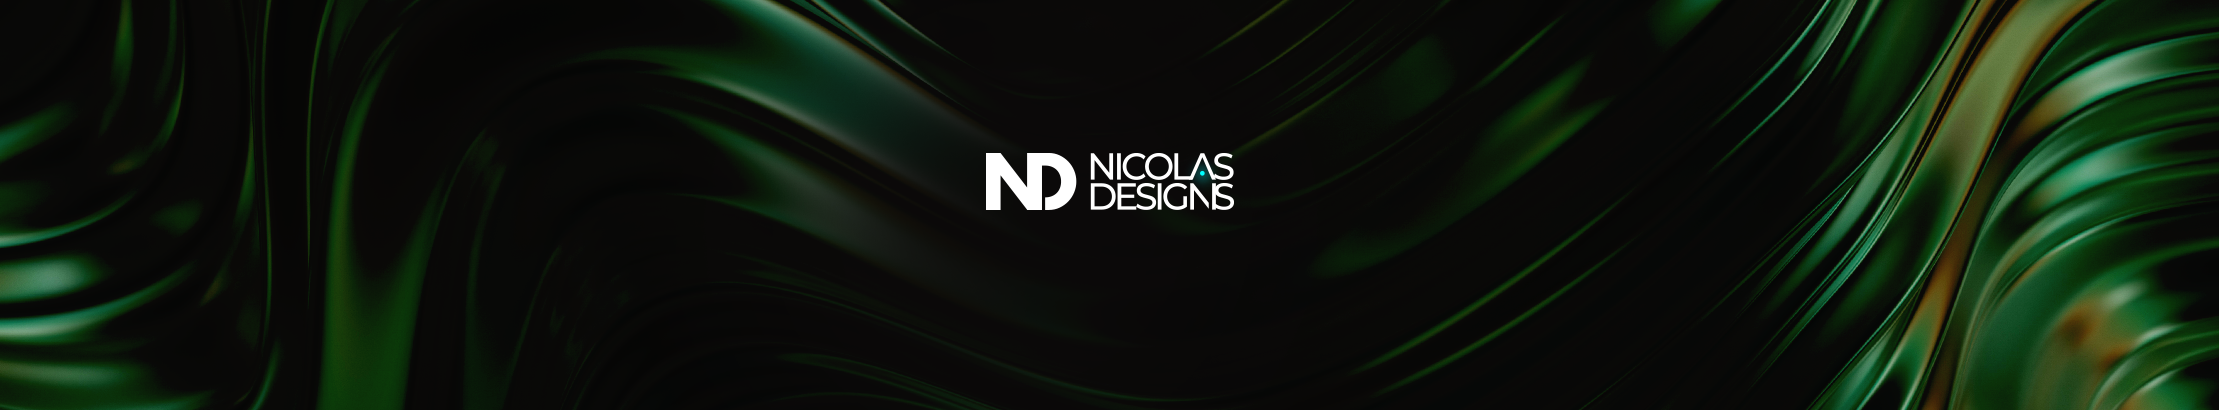 NICOLAS FOURIE's profile banner